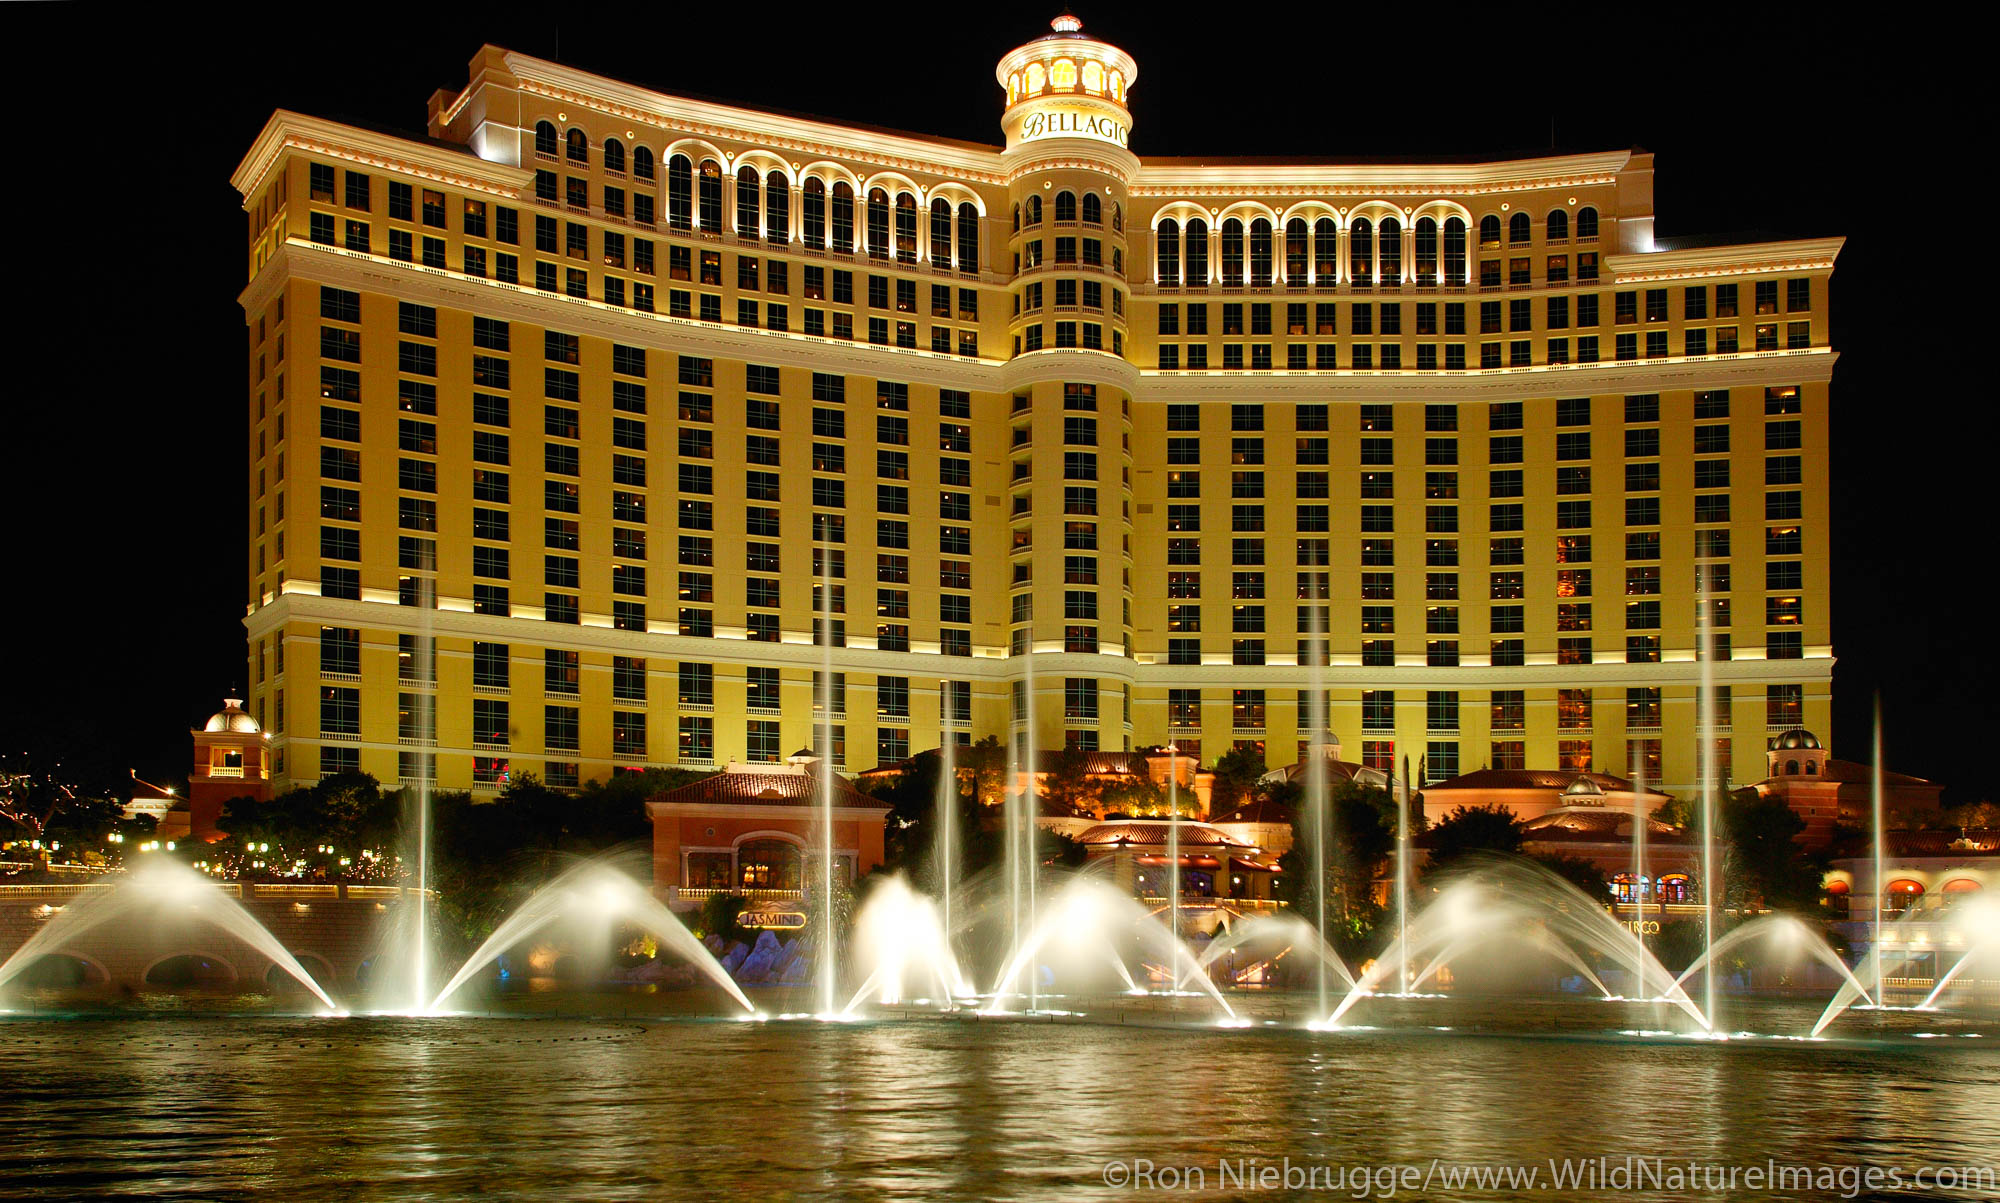 The Bellagio hotel and casino in Las Vegas, Nevada.